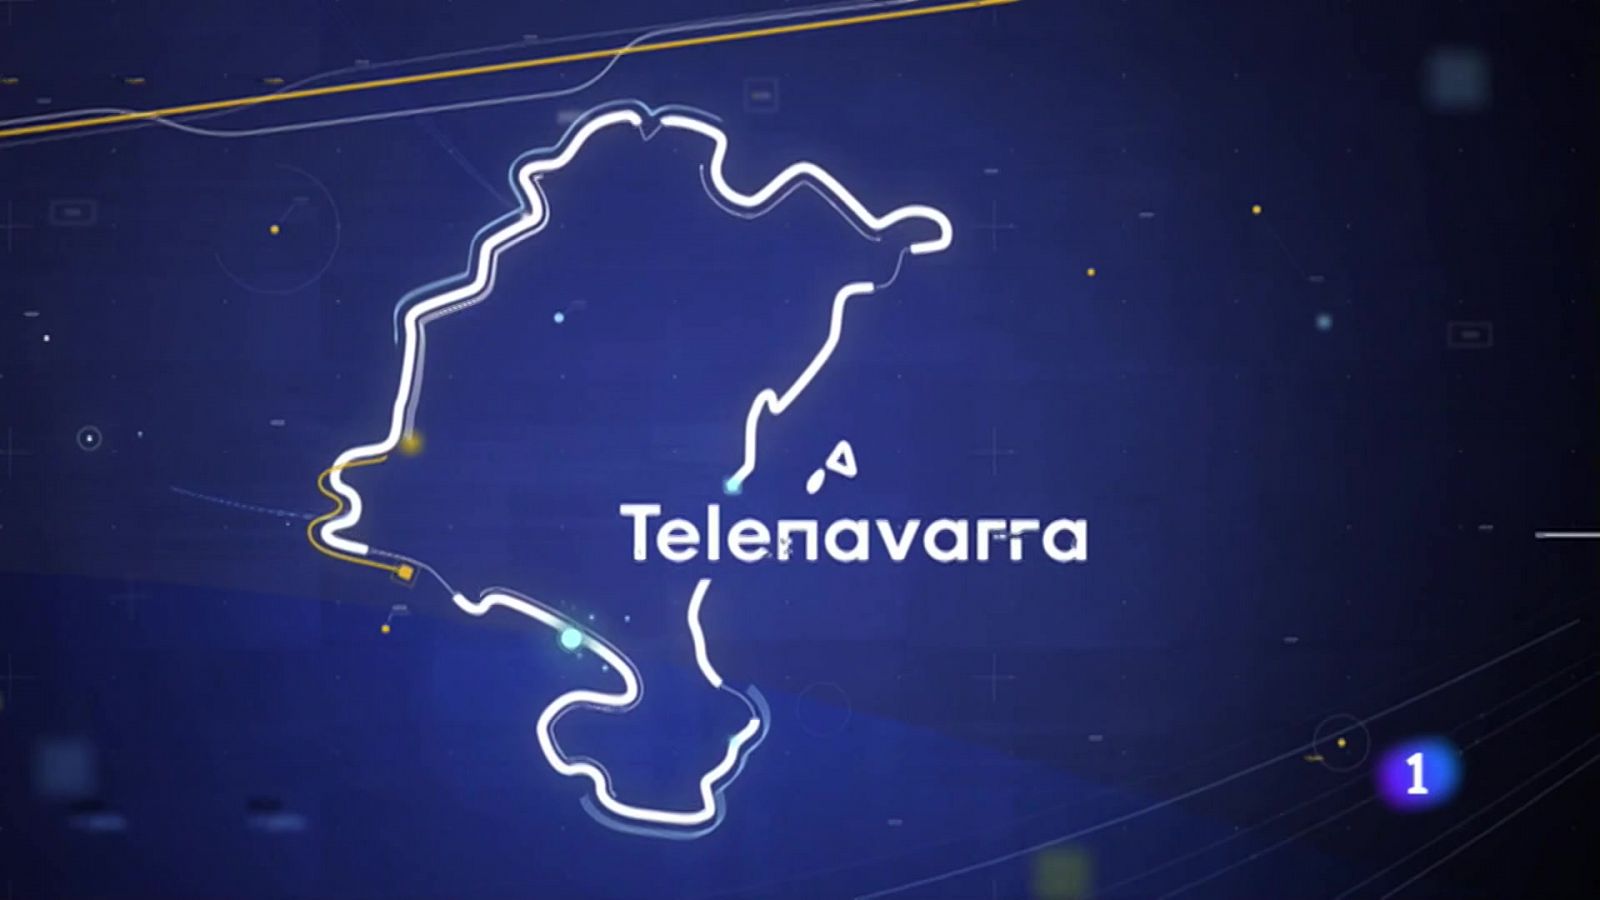 Telenavarra - 3/5/2022 - RTVE.es